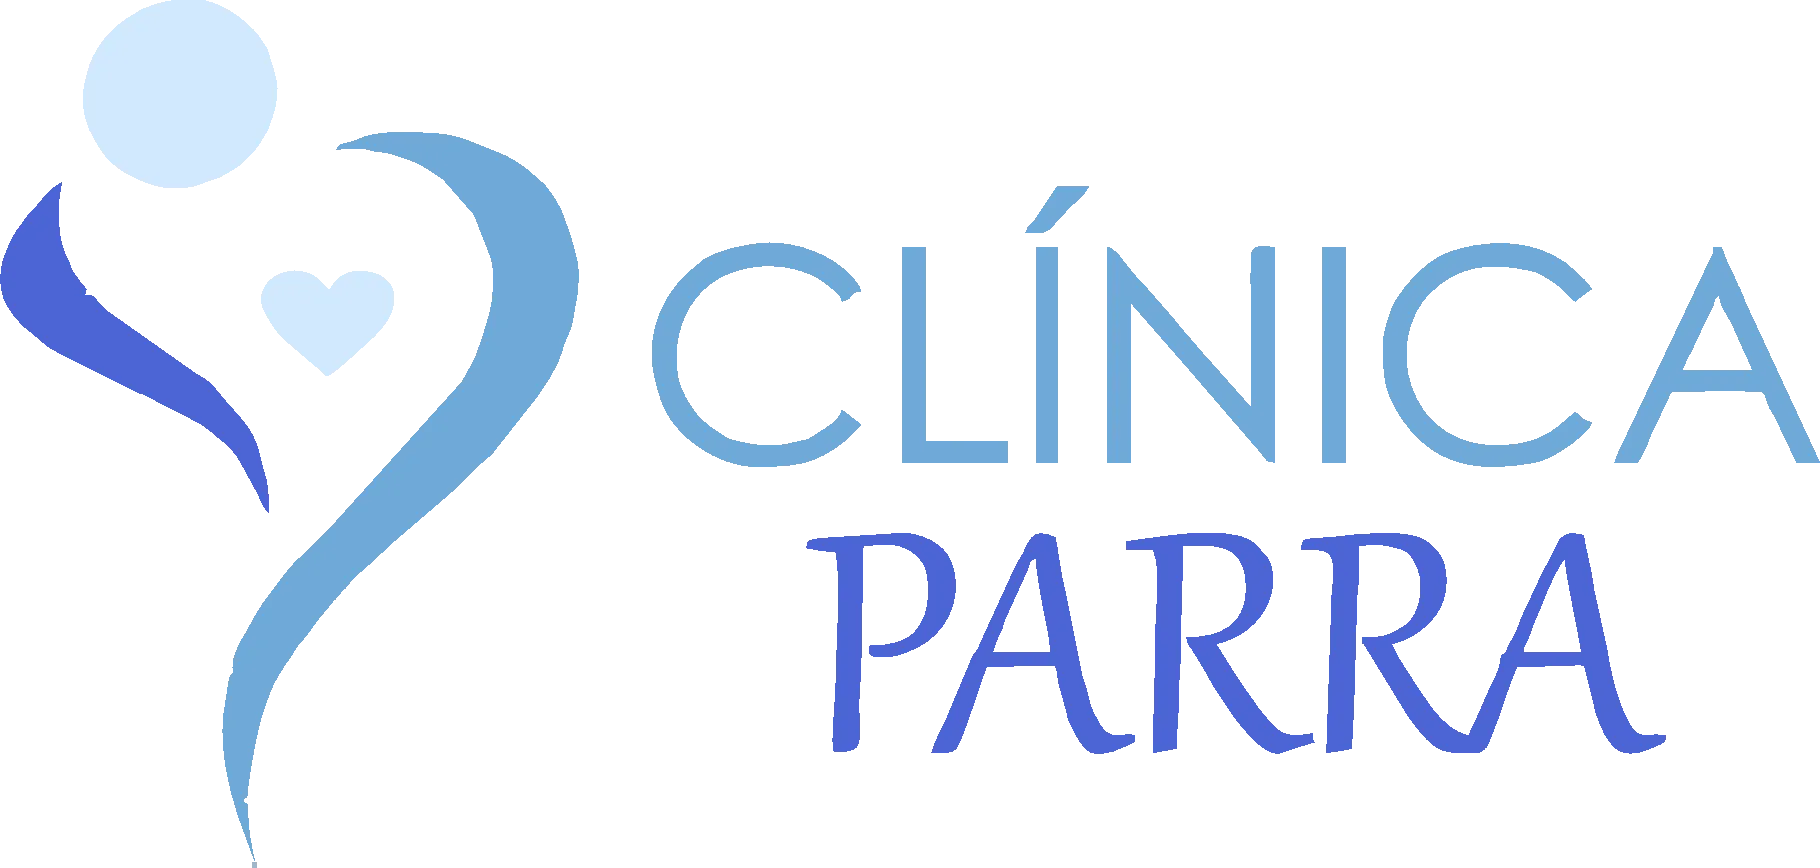 Clínica Parra Logo